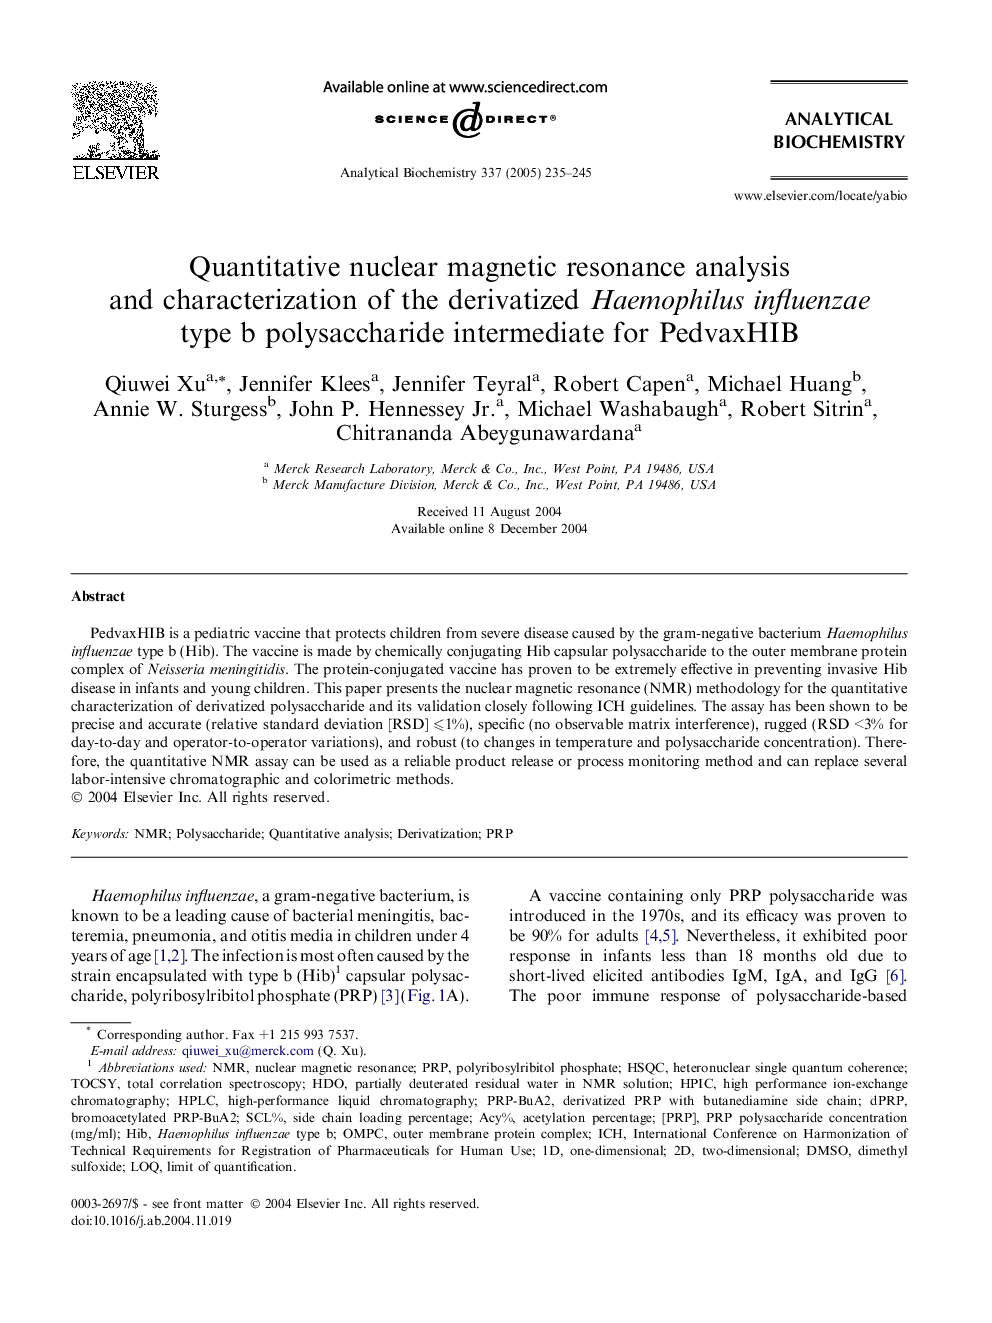 Quantitative nuclear magnetic resonance analysis and characterization of the derivatized Haemophilus influenzae type b polysaccharide intermediate for PedvaxHIB